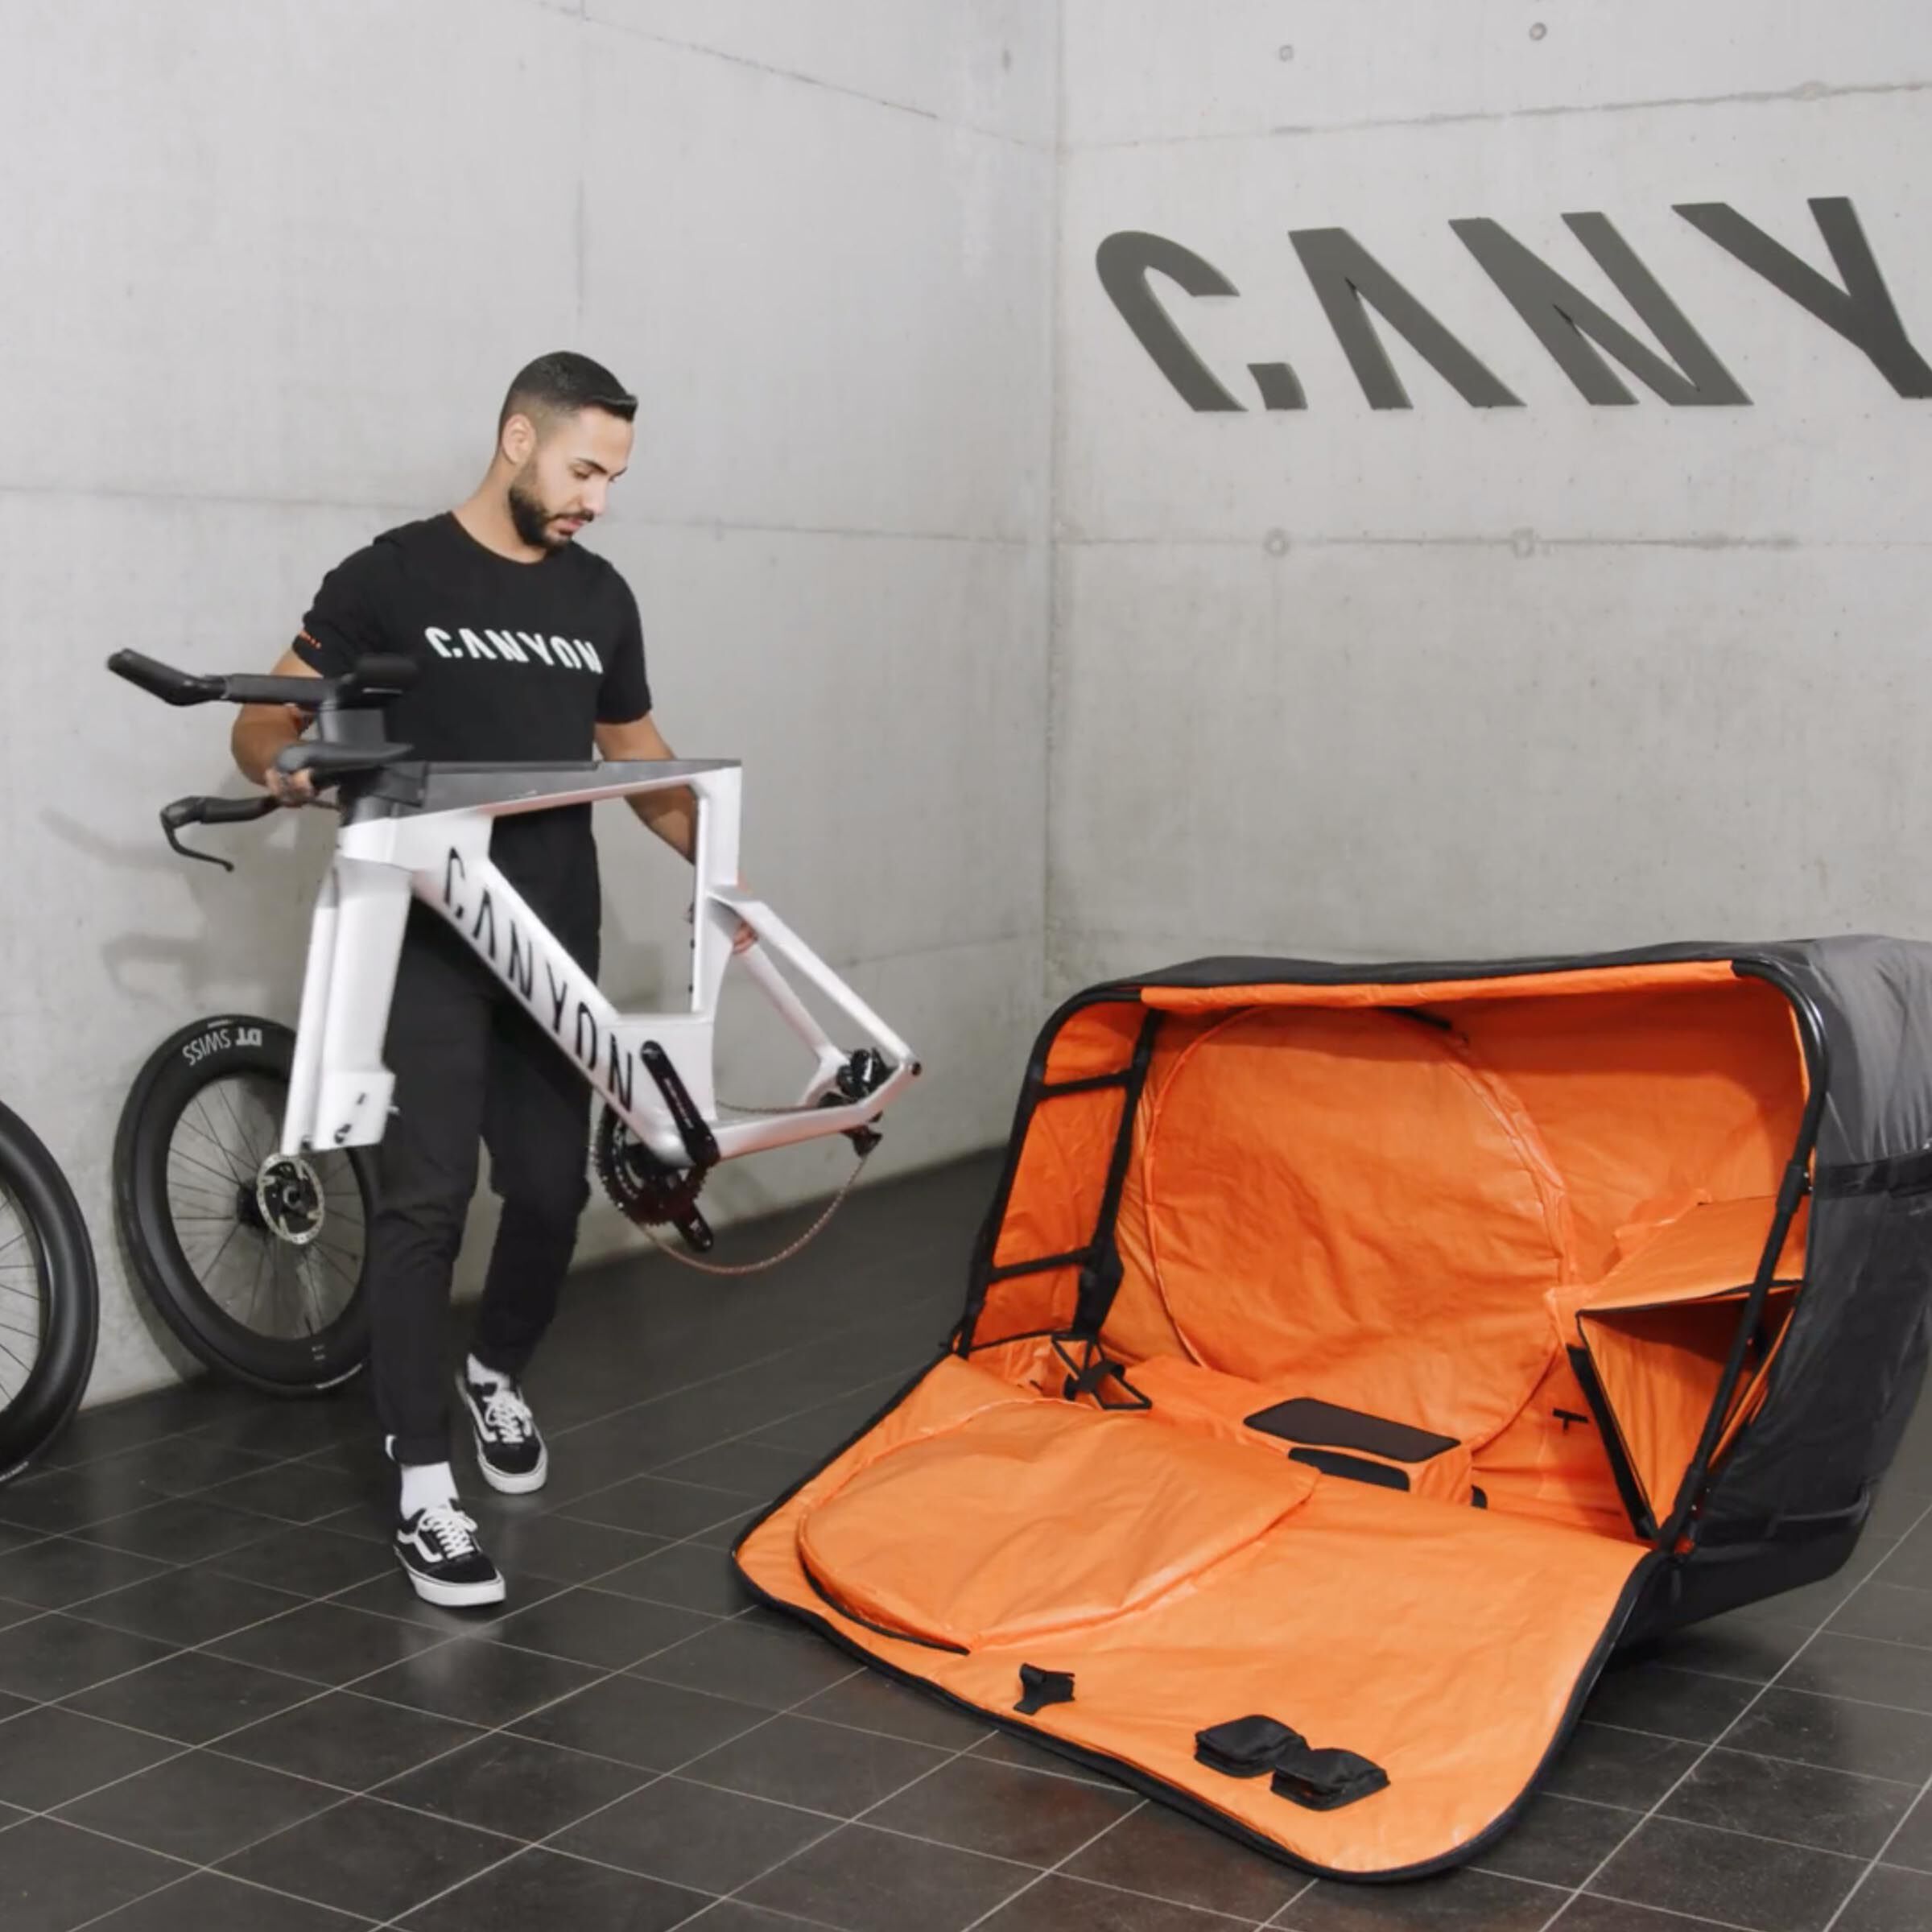 canyon transport signature pro bike bag